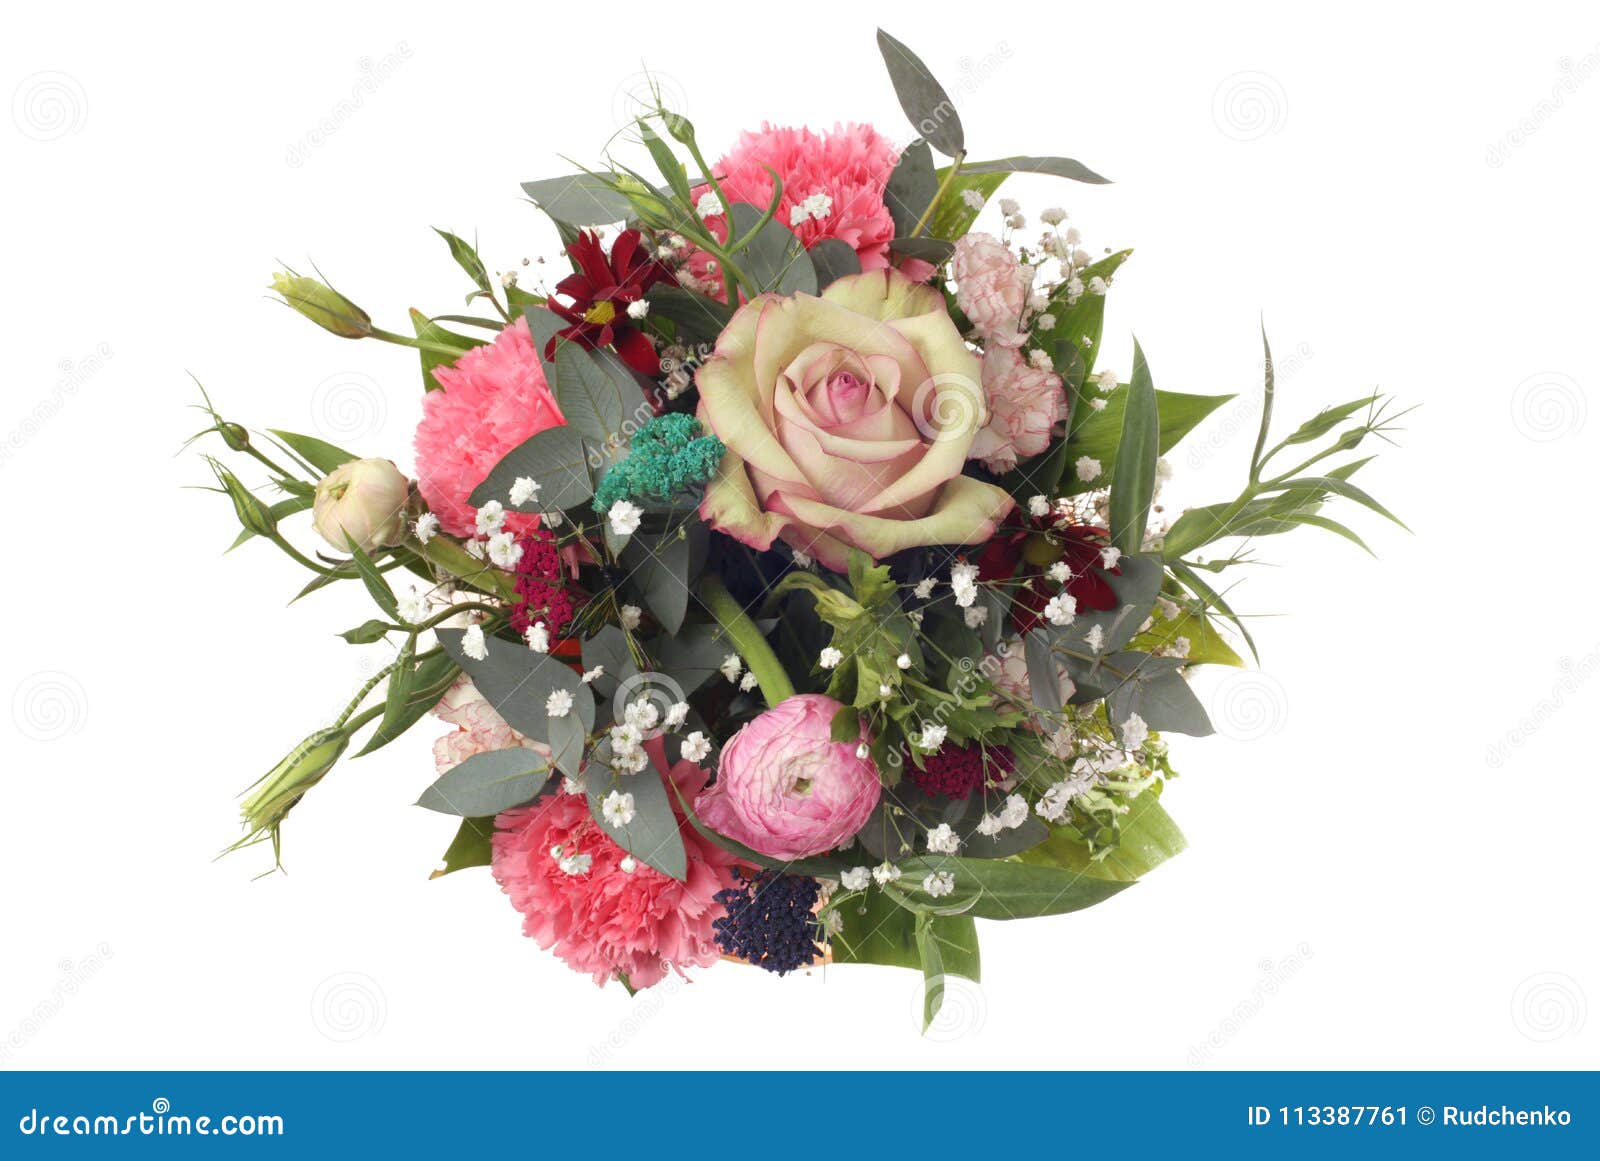 Flower Bouquet on White Background Stock Image - Image of decorative